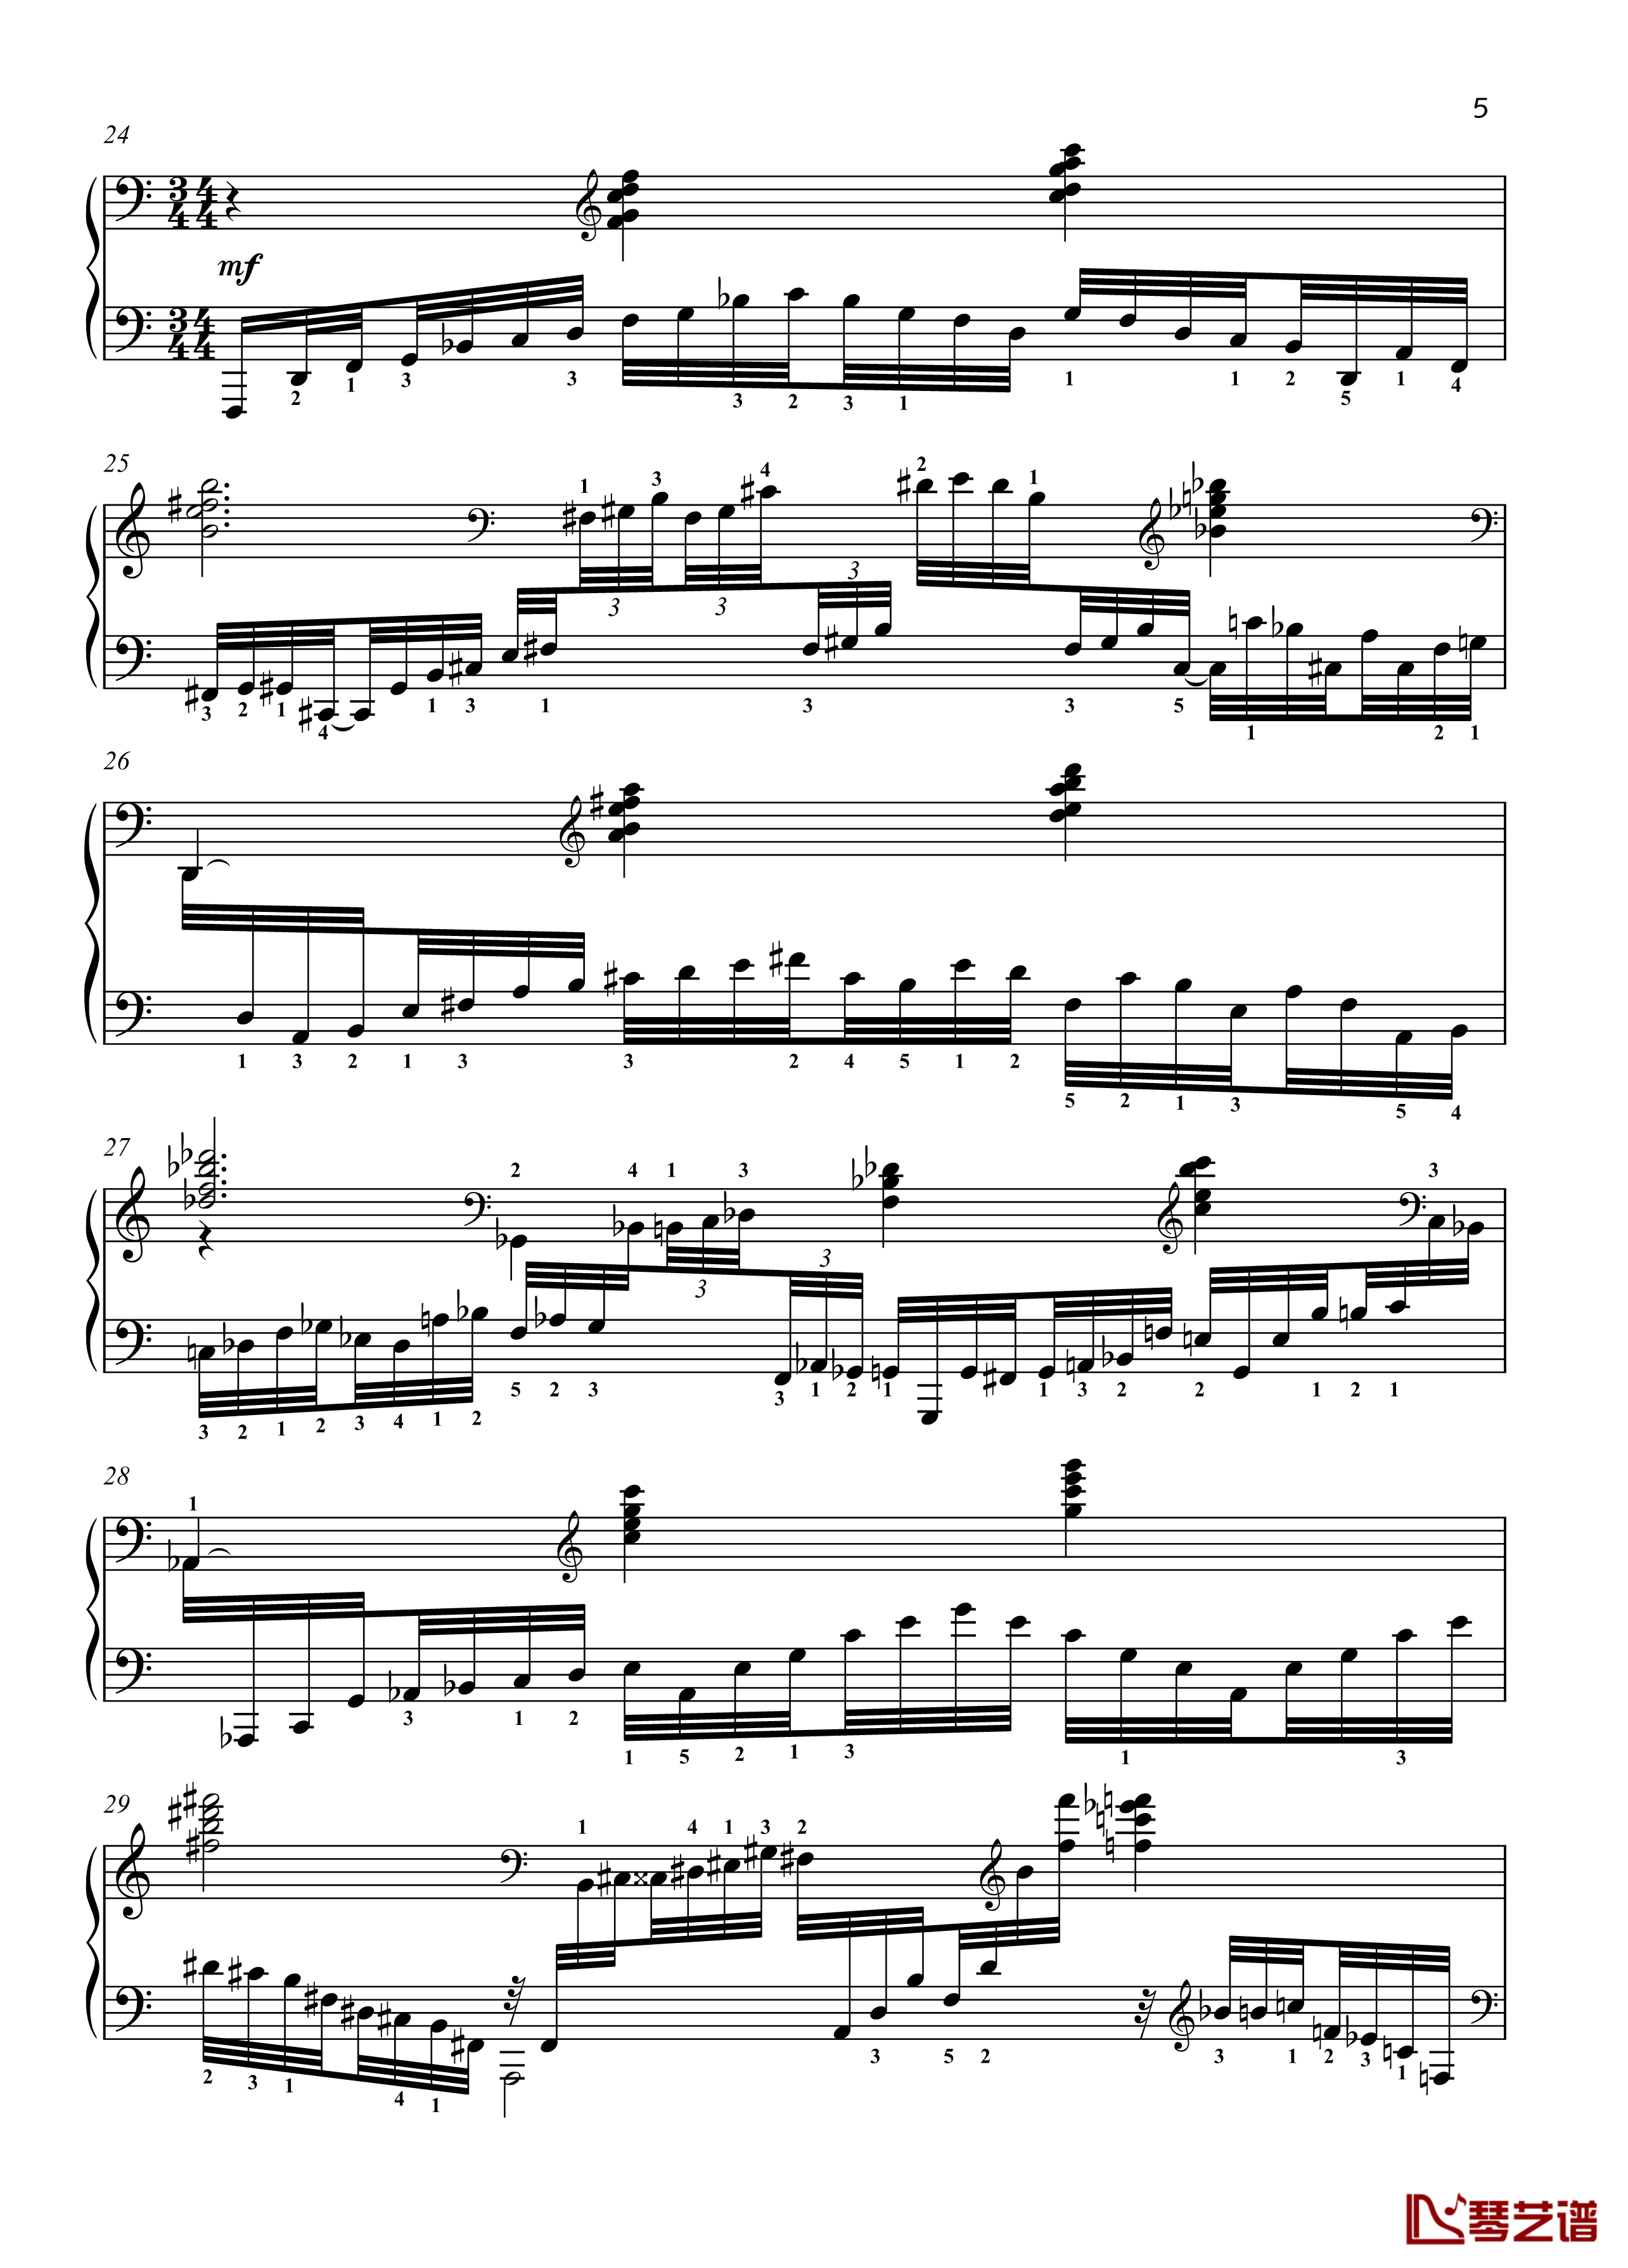 No. 4. Reminiscence钢琴谱-带指法-八首音乐会练习曲  Eight Concert ?tudes Op 40 - -爵士-尼古拉·凯帕斯汀5